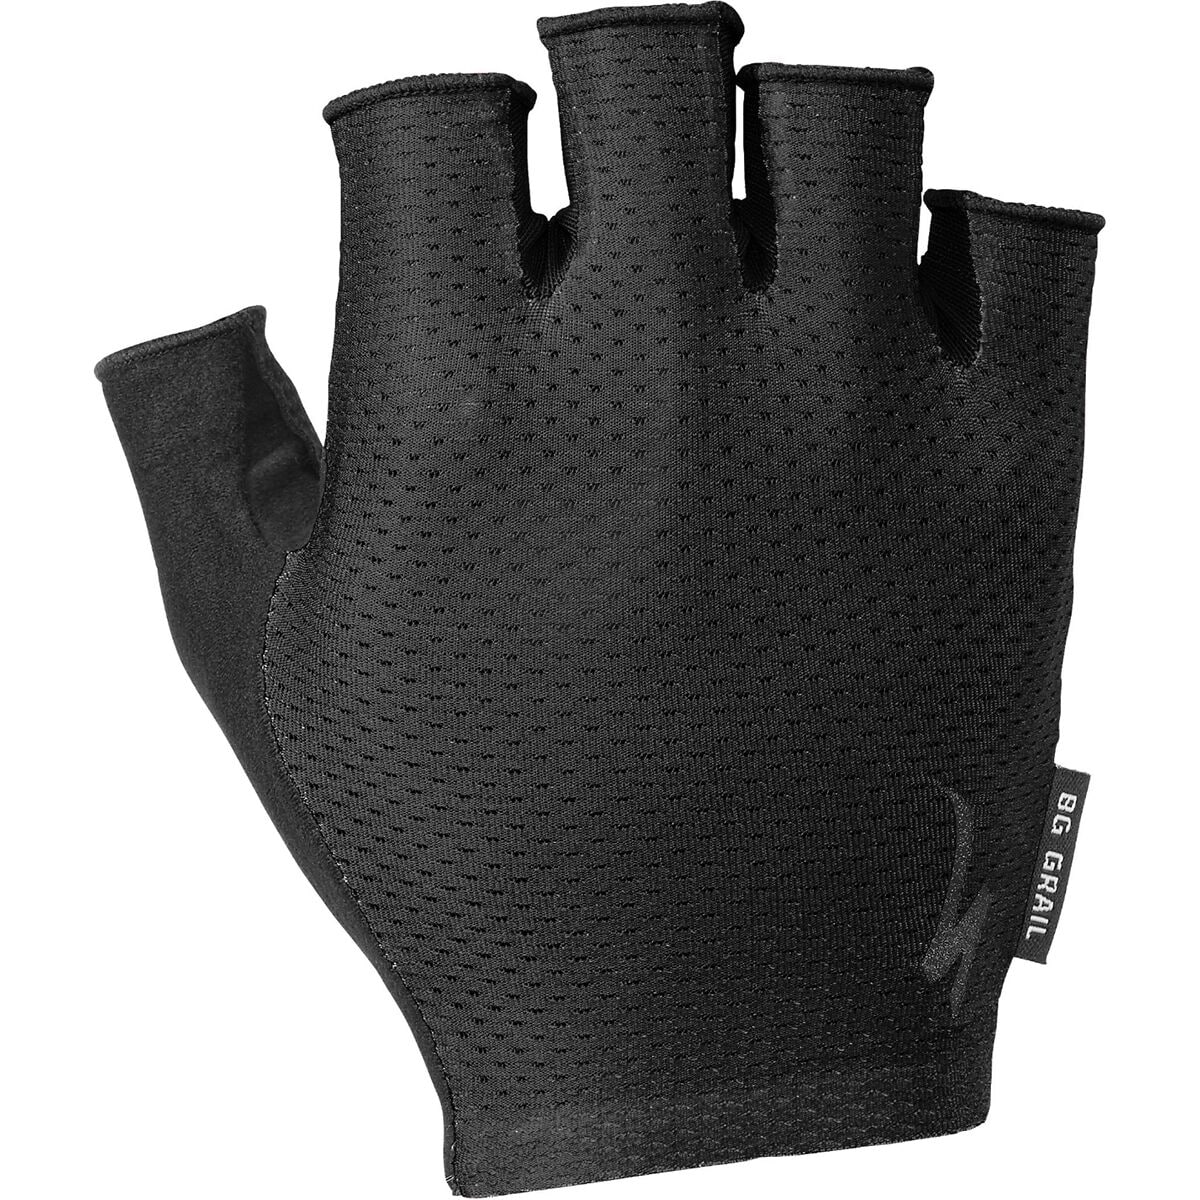 Specialized Body Geometry Grail Glove Black, XL - Men's